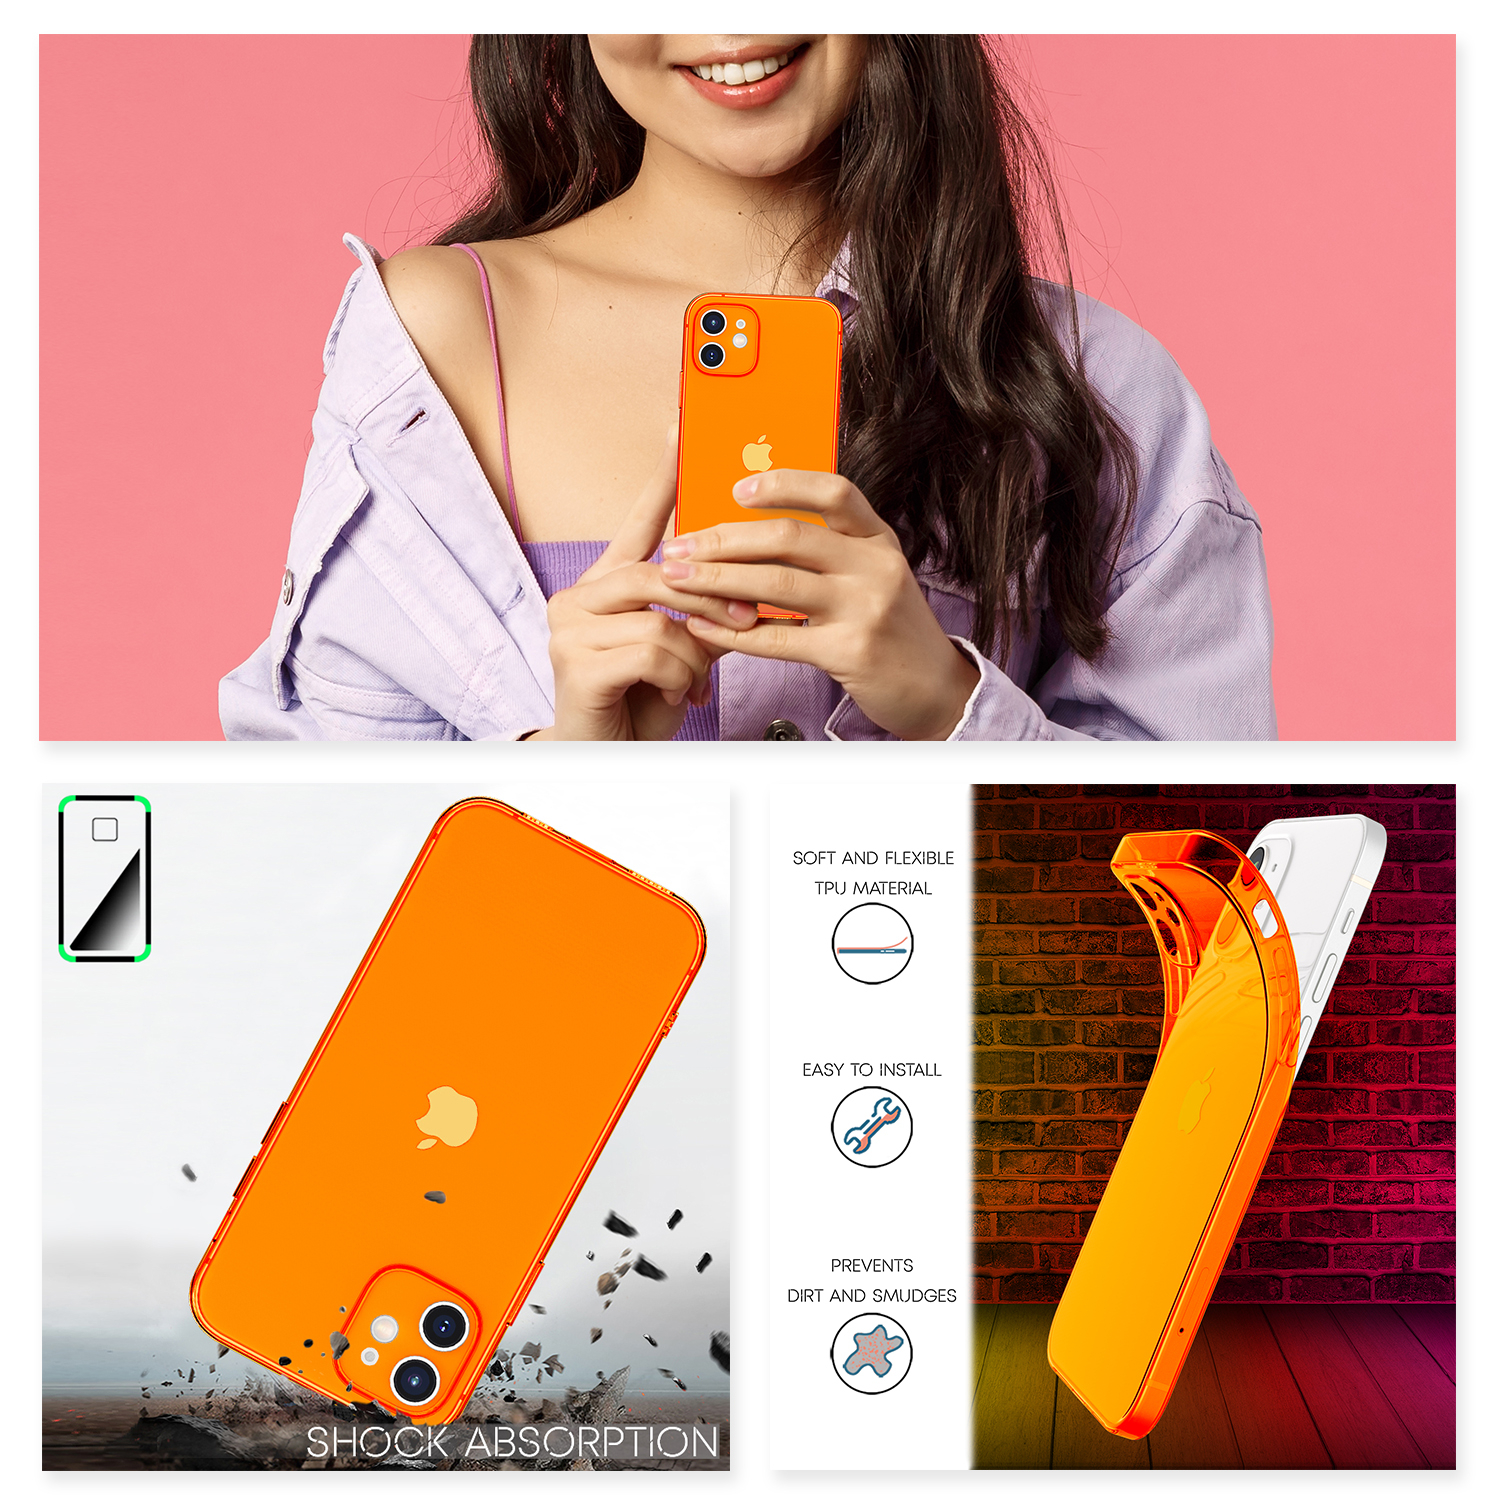 iPhone Backcover, Orange Apple, 12, NALIA Silikon Hülle, Neon Klar Transparente